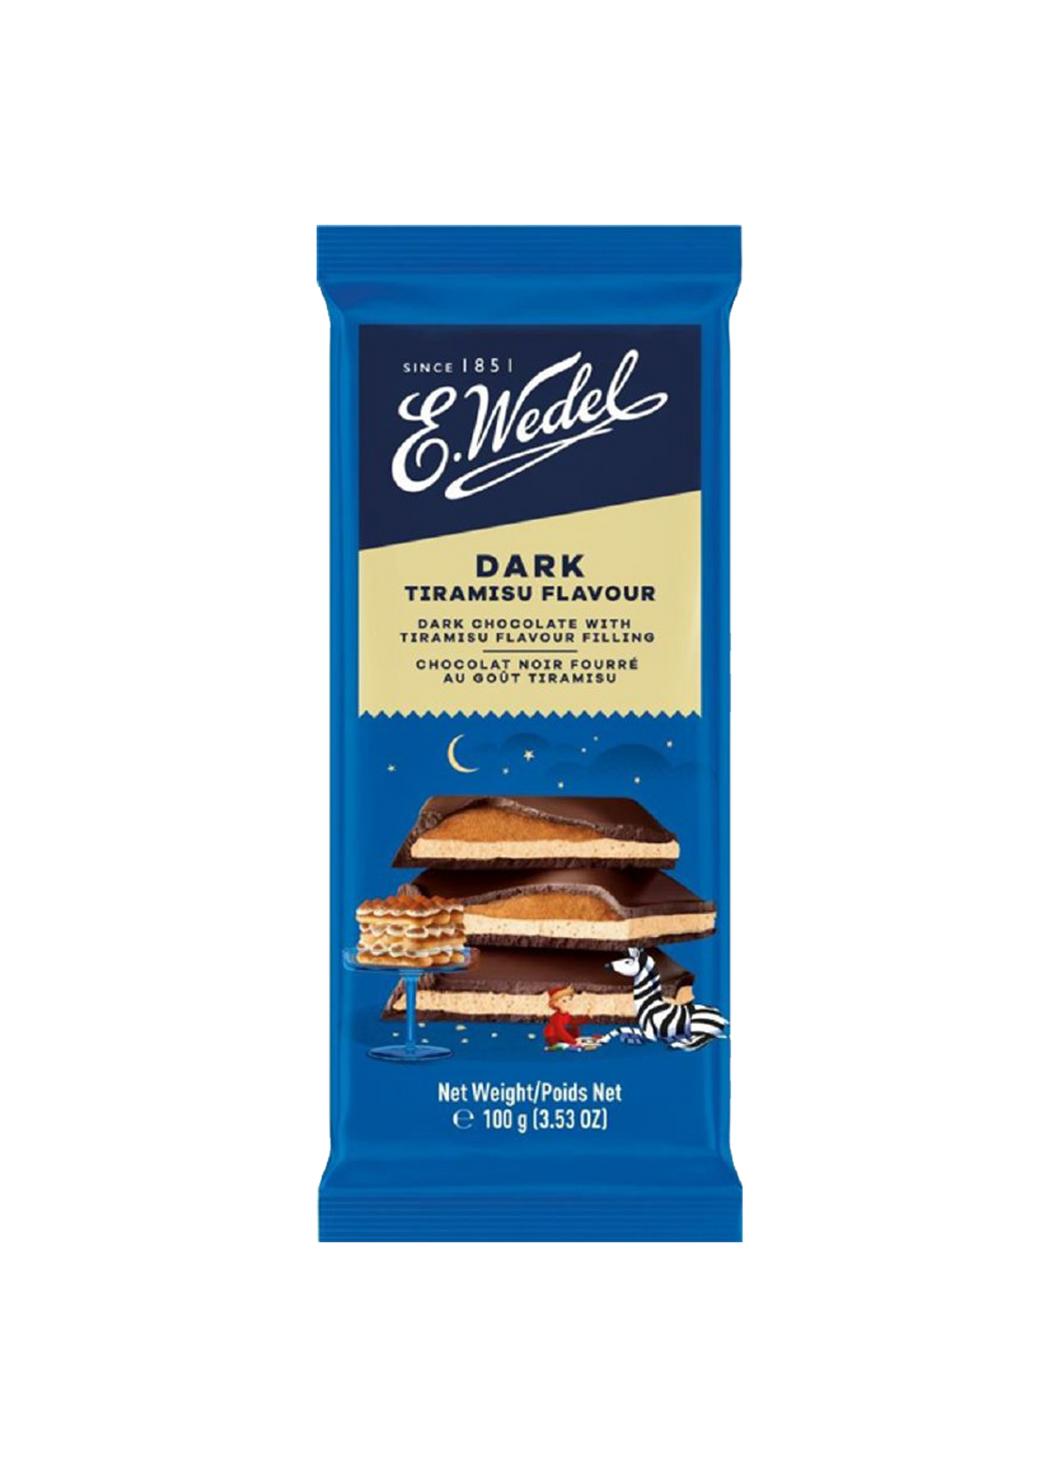 E. Wedel Dark Tiramisu Flavour 100g